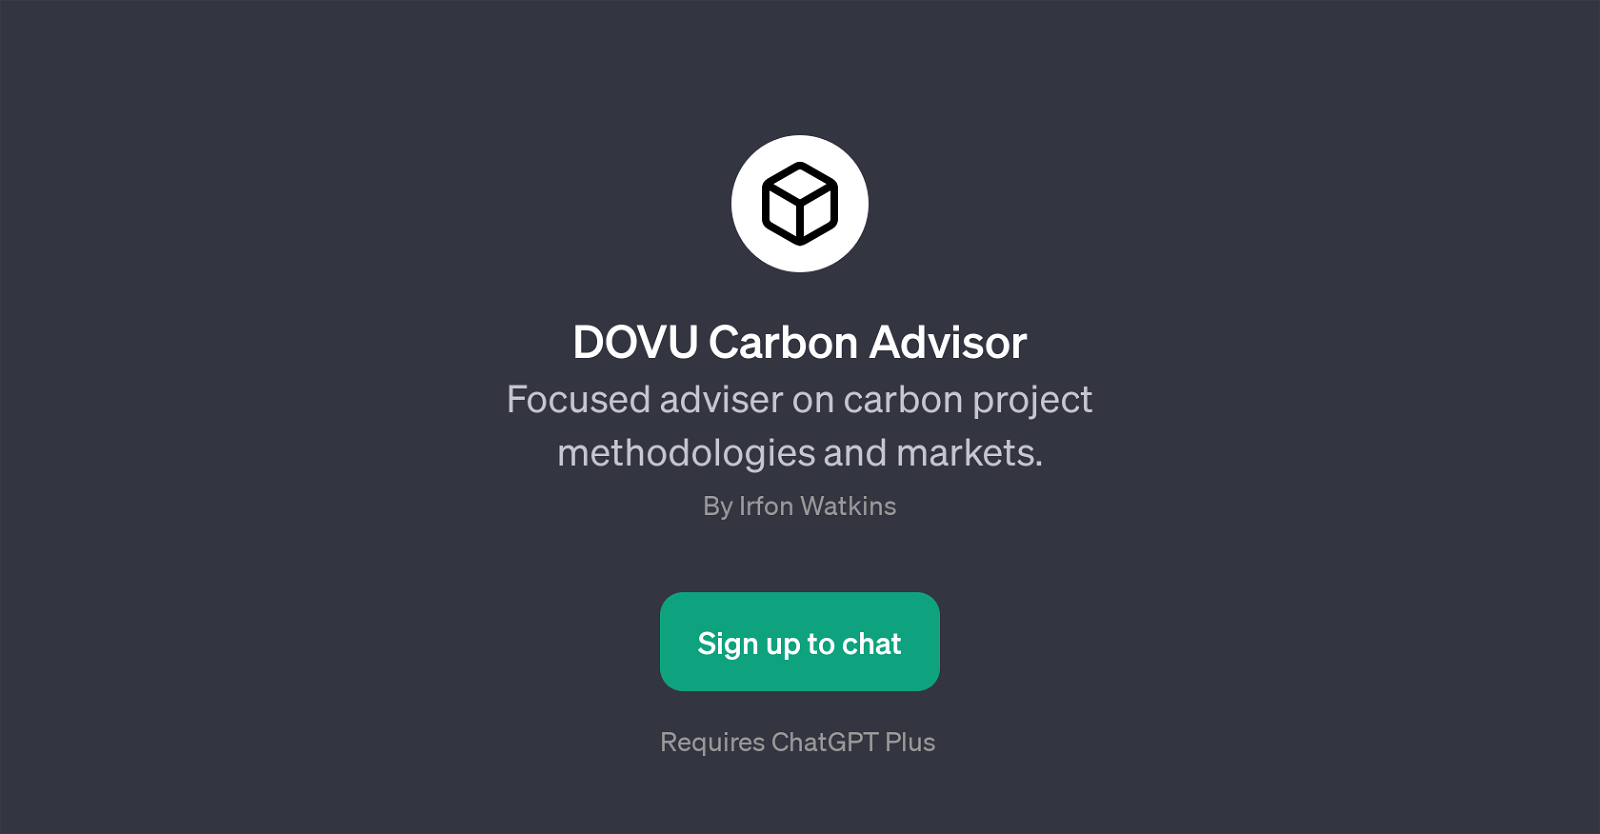 DOVU Carbon Advisor website